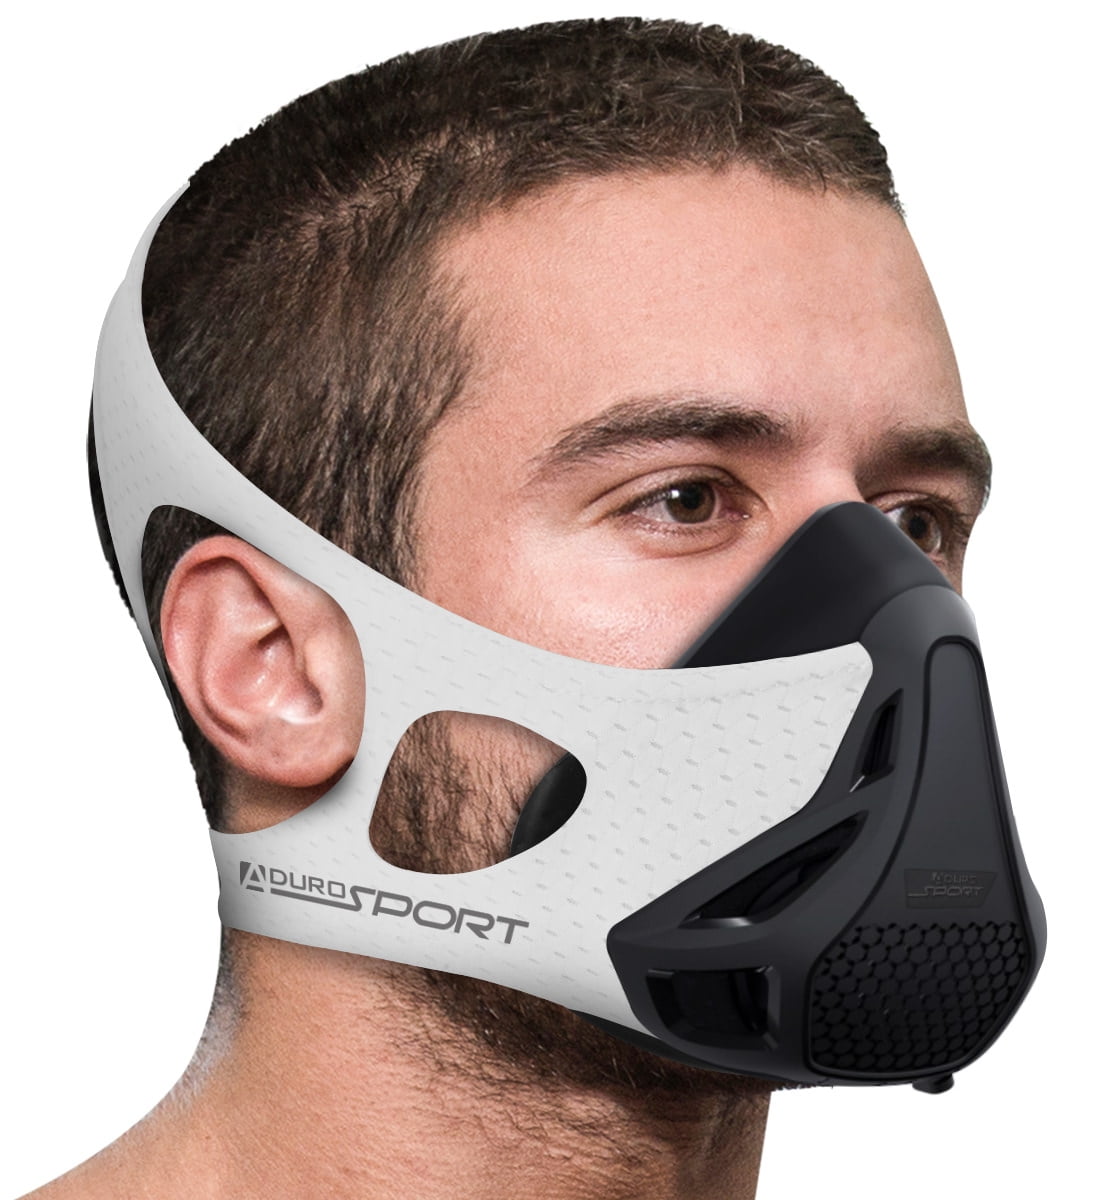 Resistance High Altitude Training Mask -